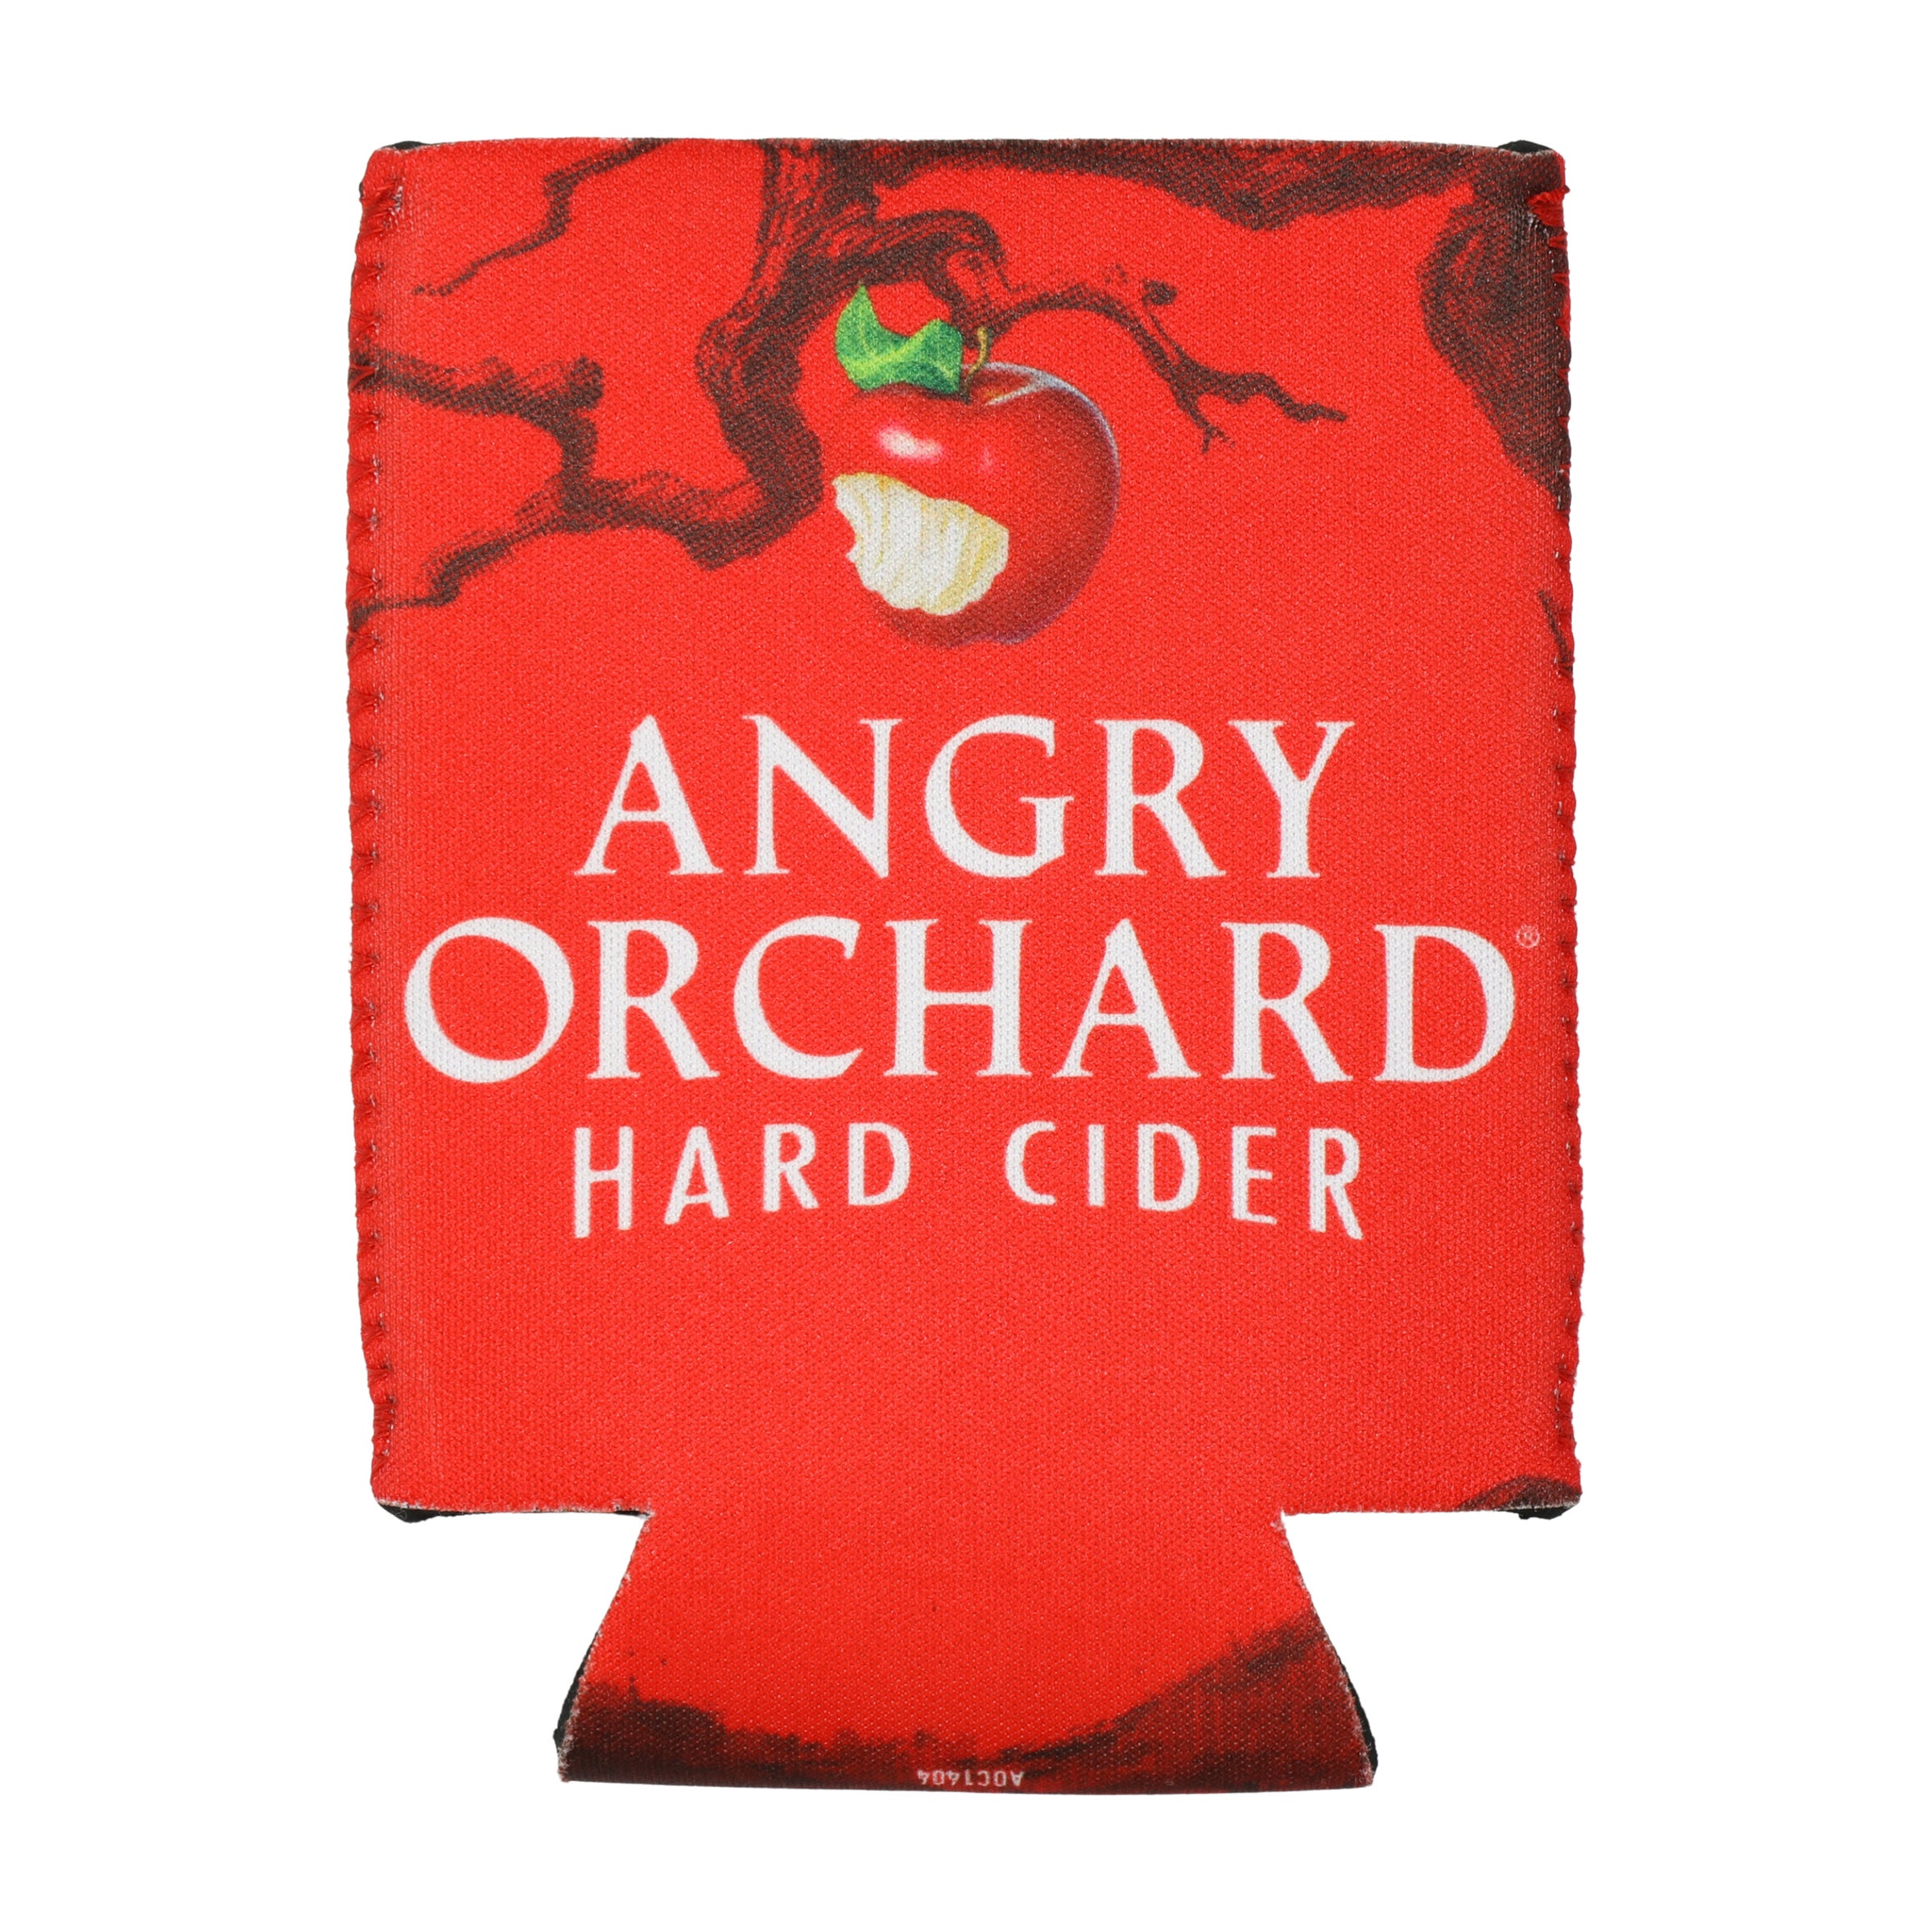 angry orchard crisp apple logo